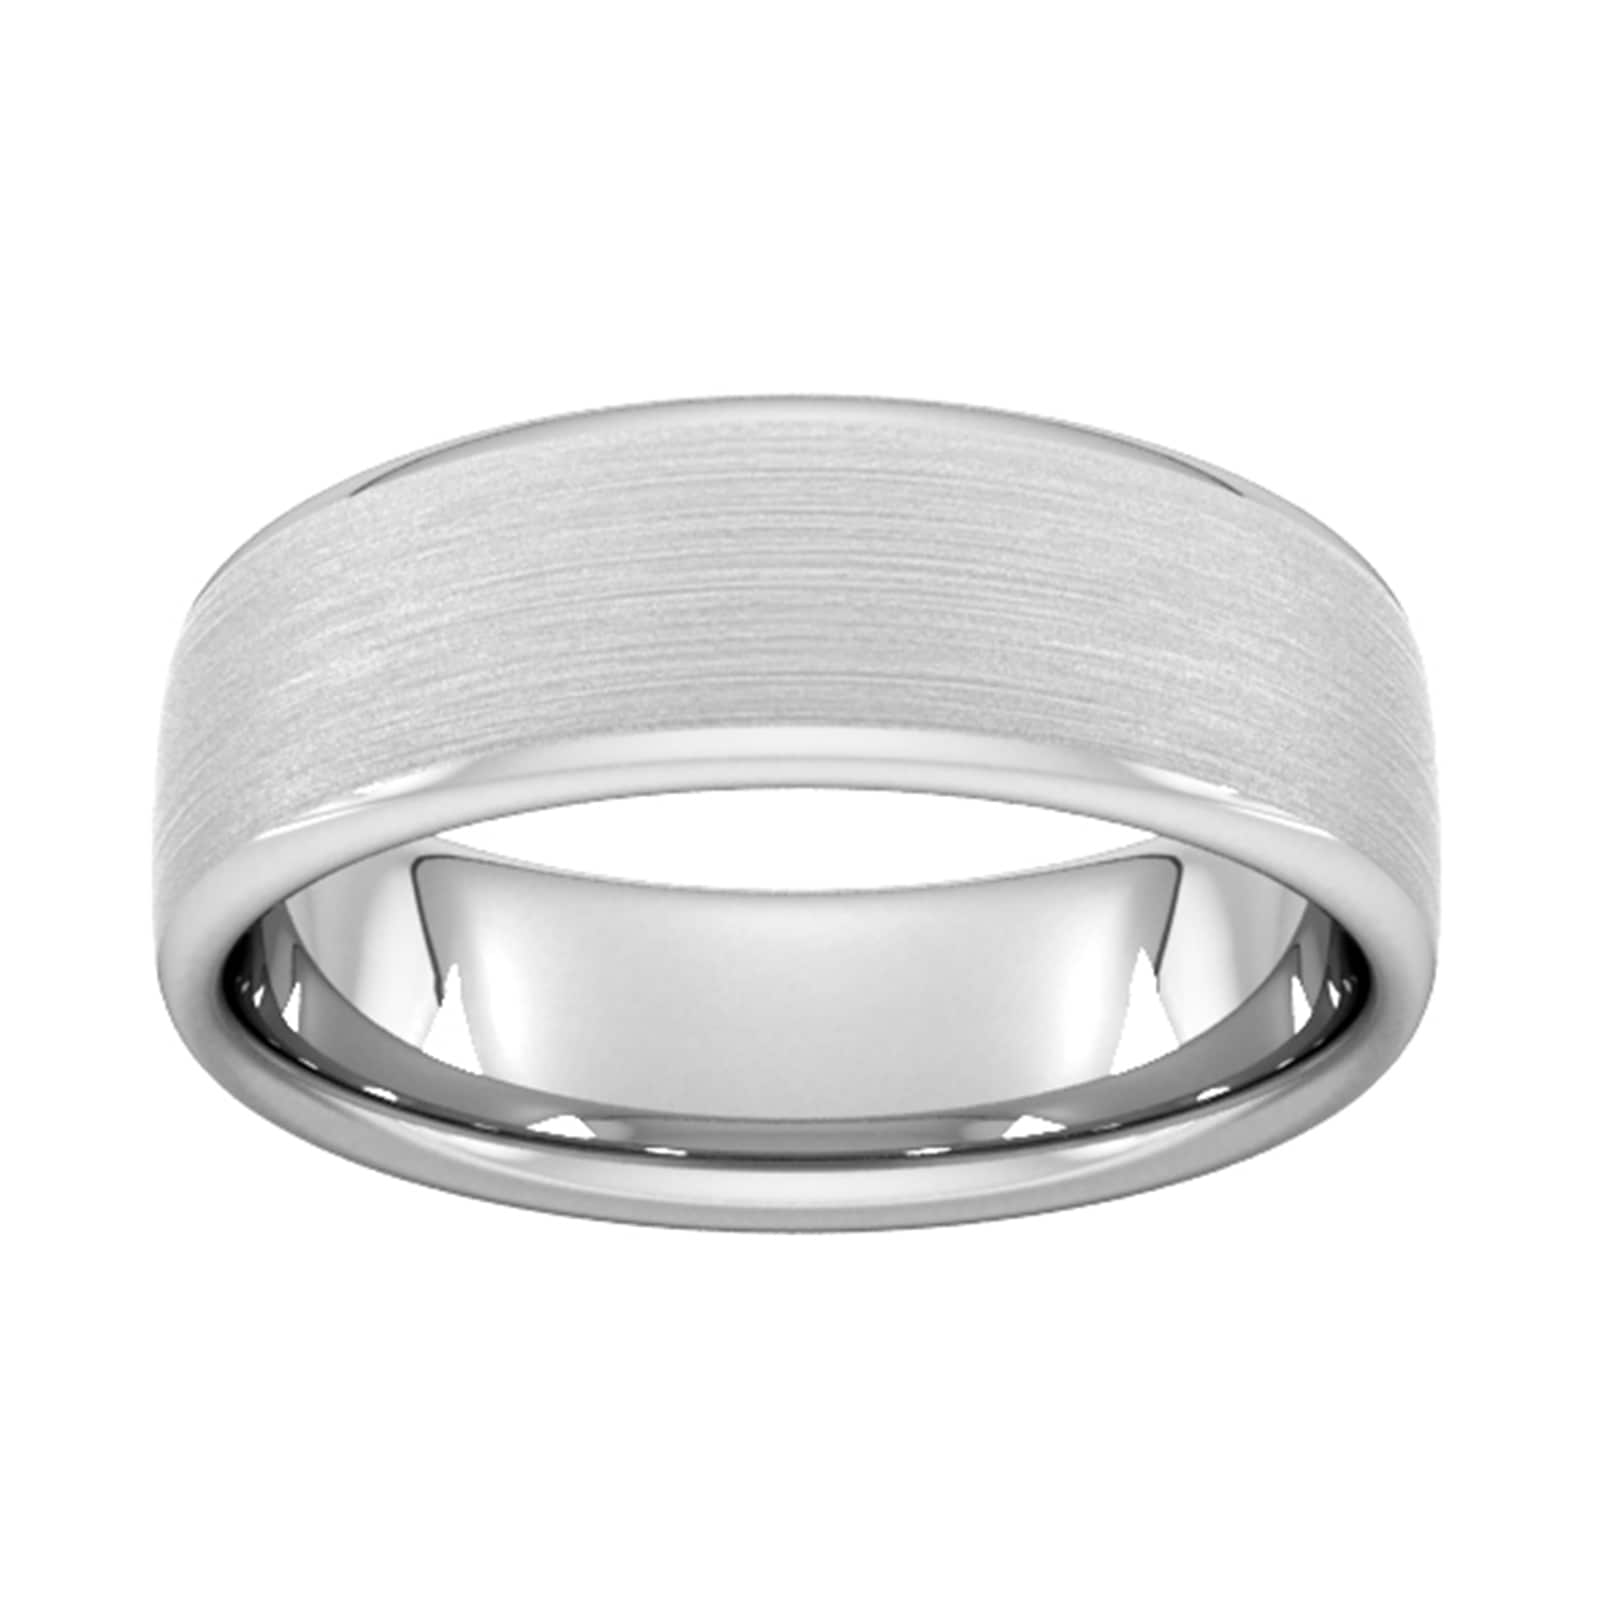 7mm D Shape Standard Matt Finished Wedding Ring In 9 Carat White Gold - Ring Size S